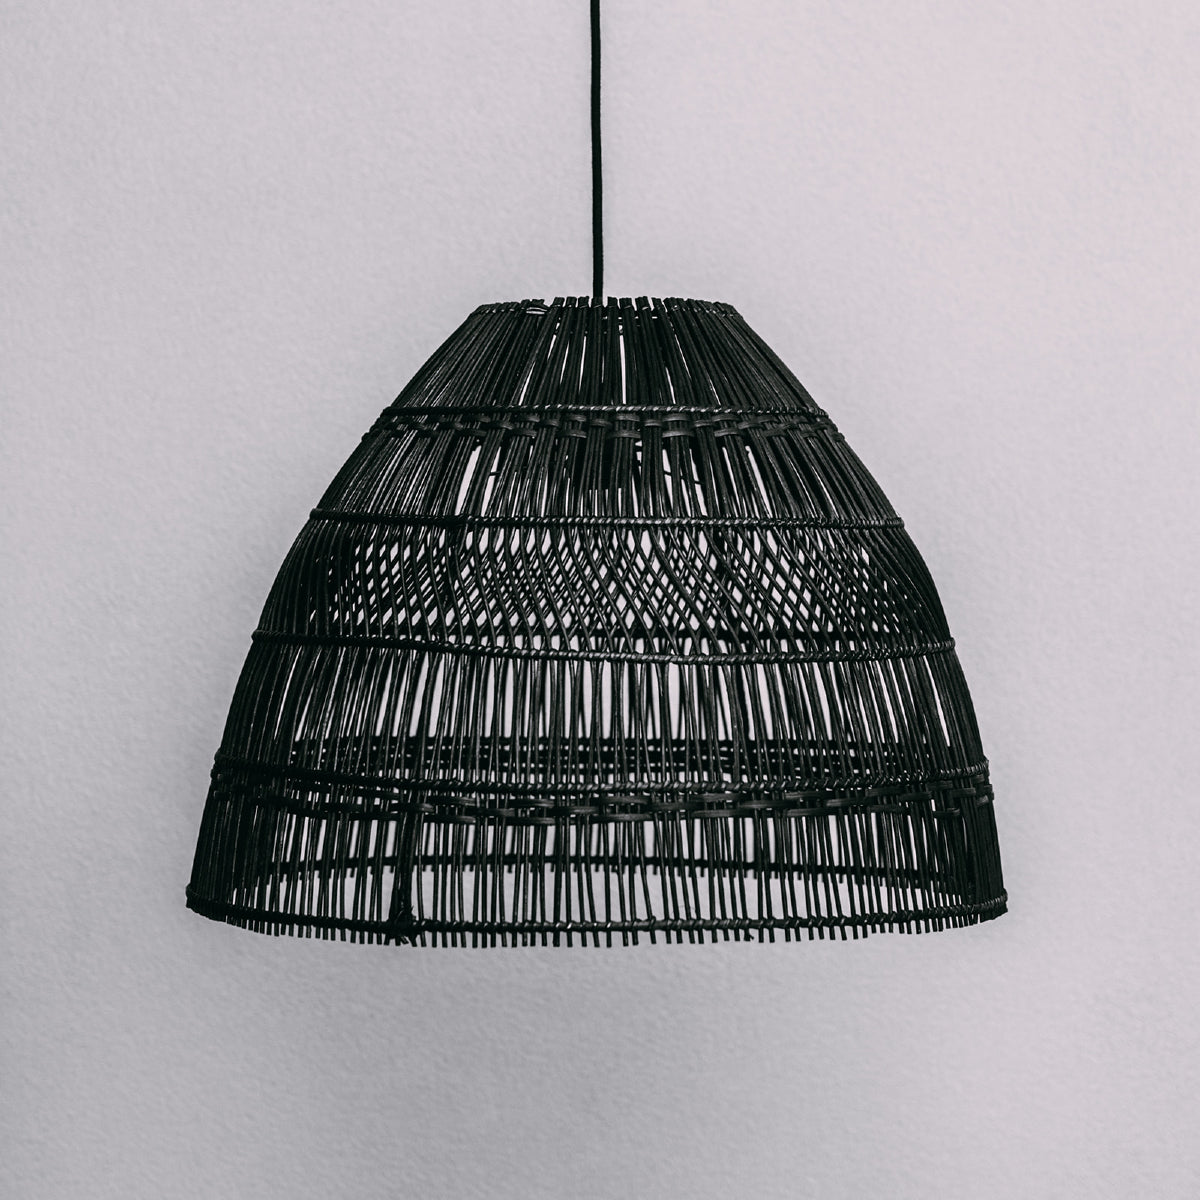 Rattan pendant light. Black-rattan-pendant-light-with-straight-and-diamond-weave-design